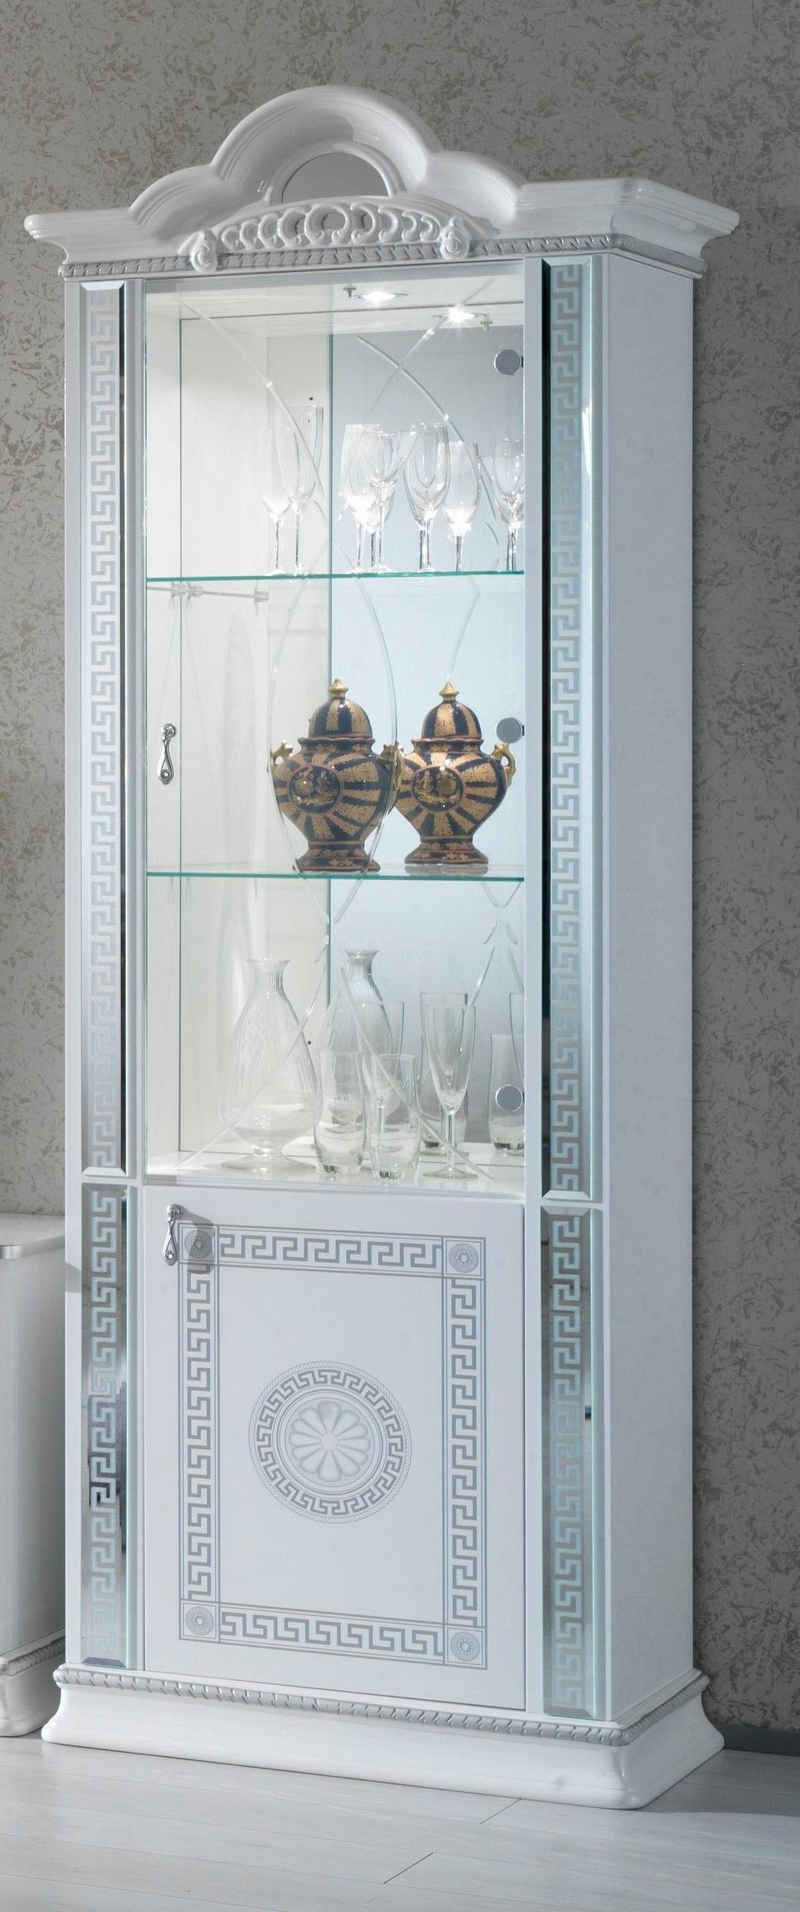 JVmoebel Vitrine Hochwertige Vitrine Vitrinen Luxus Schrank Holz Italienische Stil Möbel Glas Neu